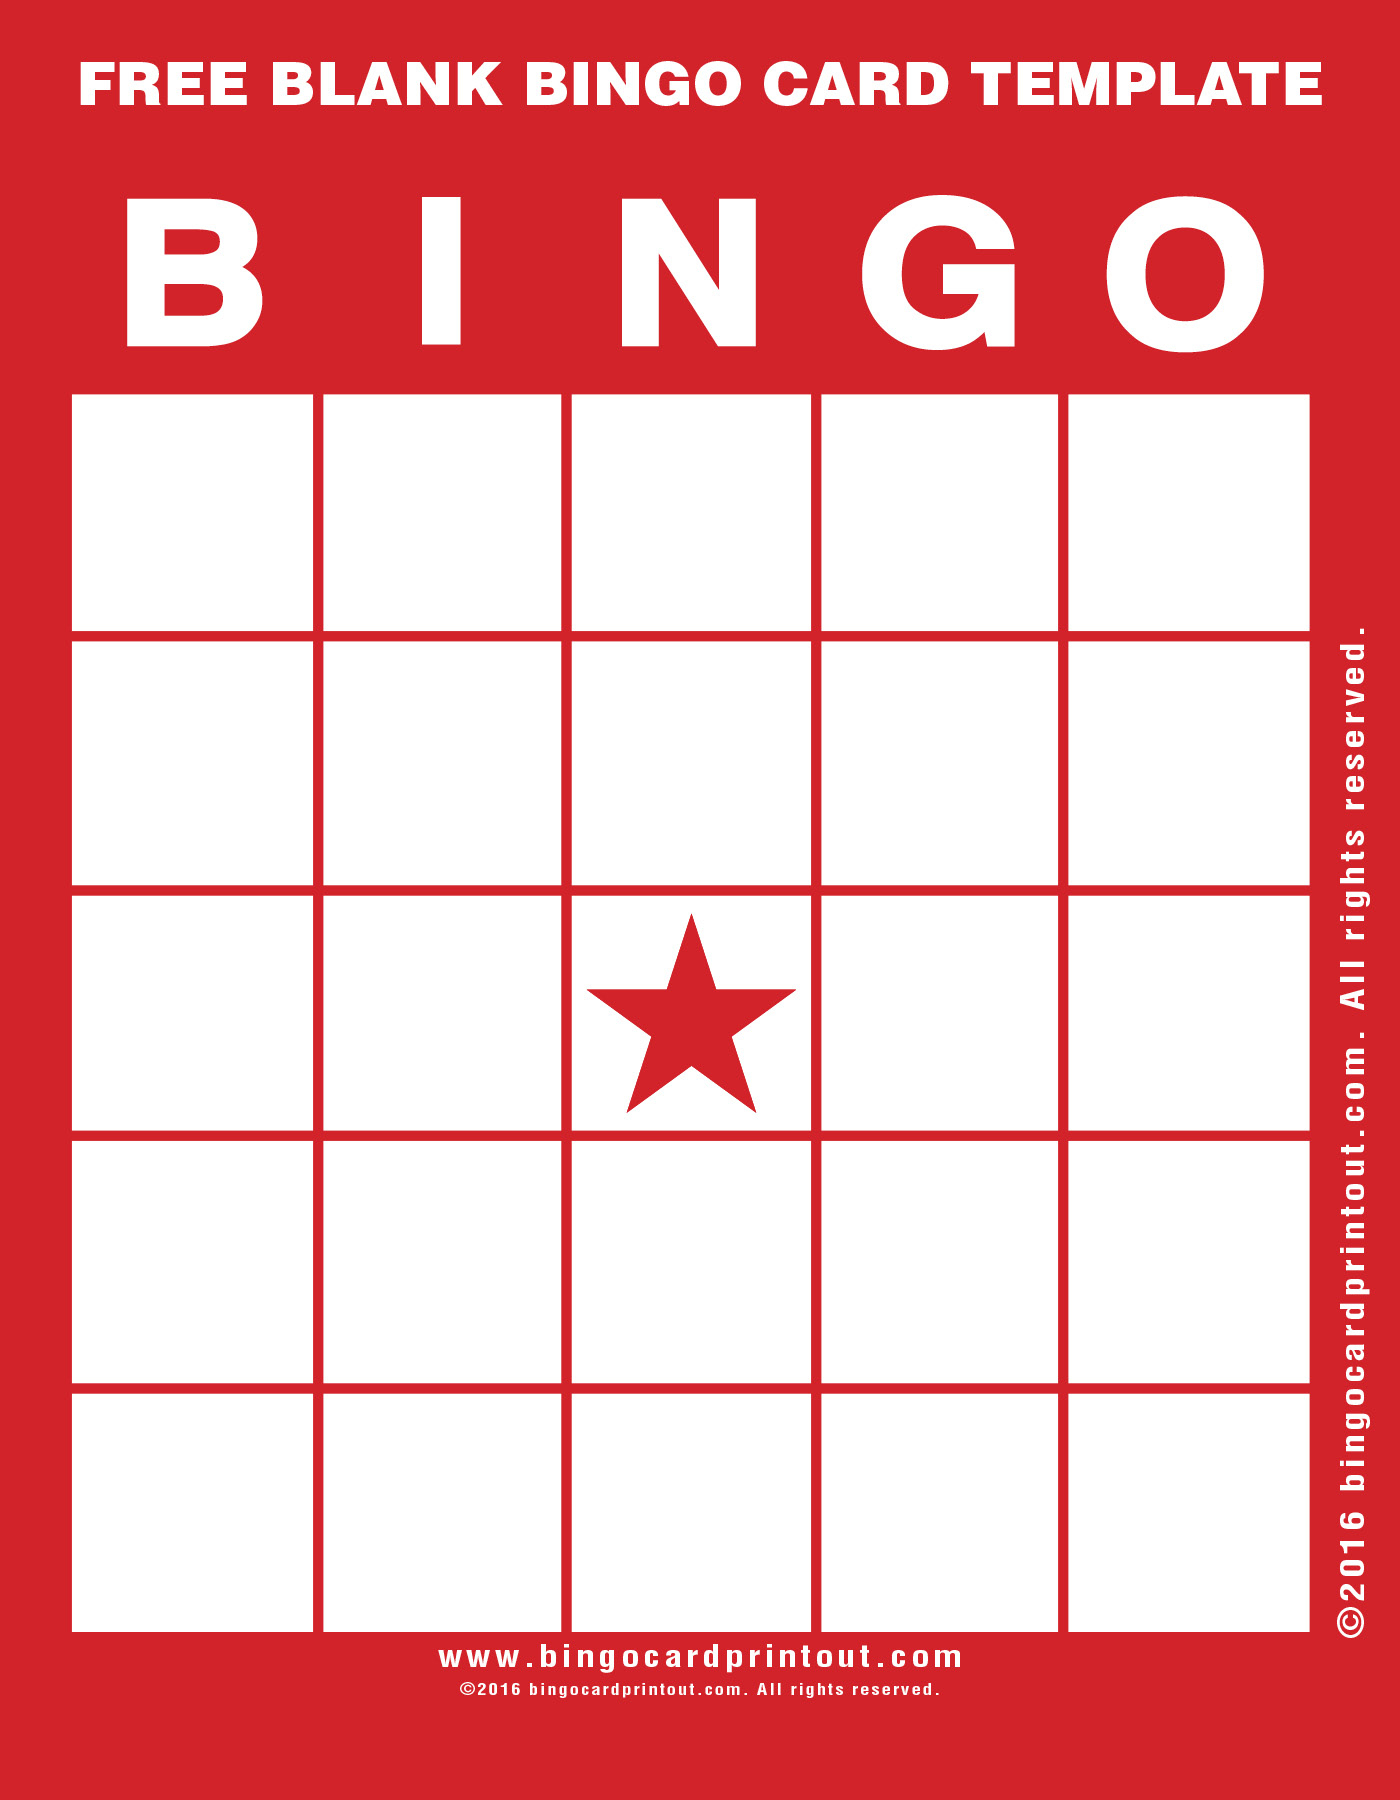 Free Blank Bingo Card Template - Bingocardprintout